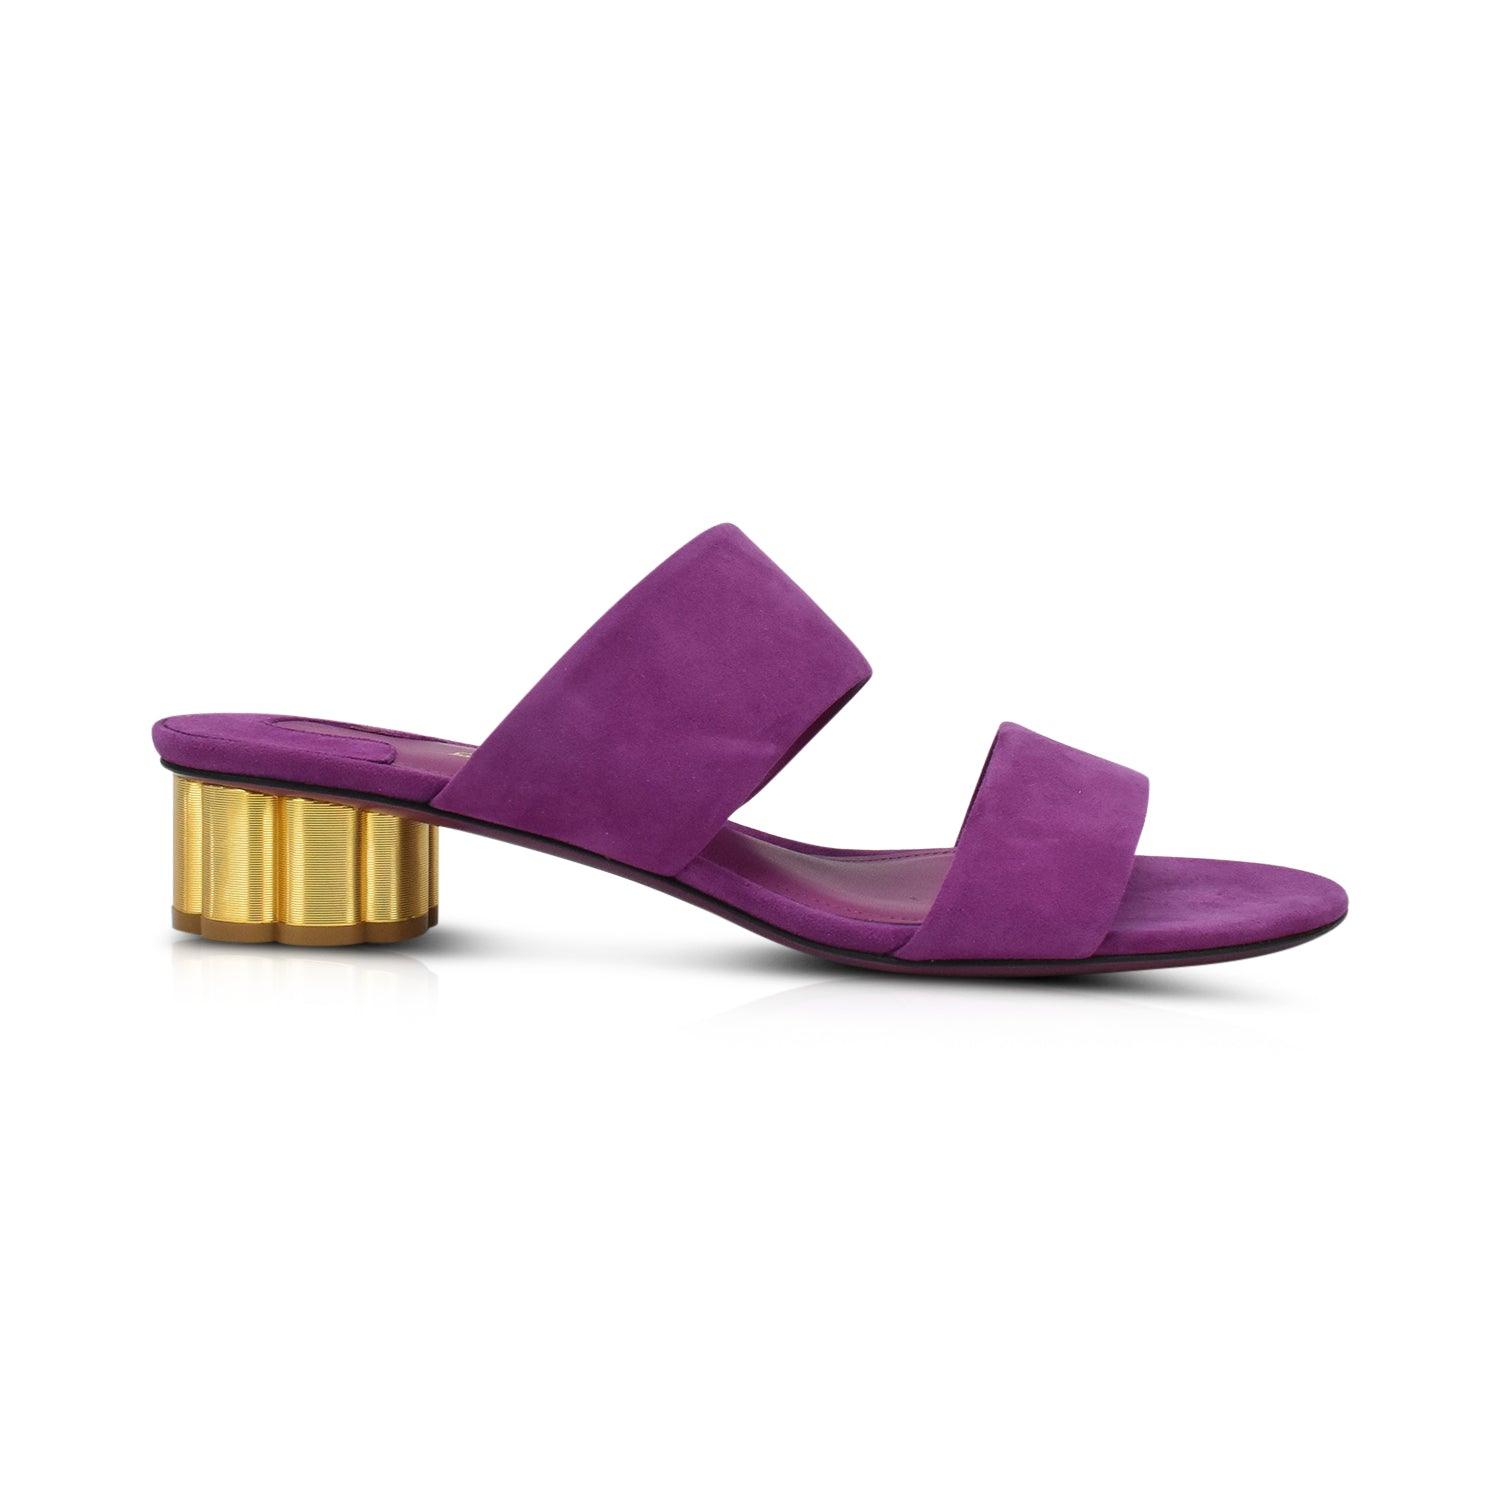 Salvatore Ferragamo Sandals - Women's 8 - Fashionably Yours